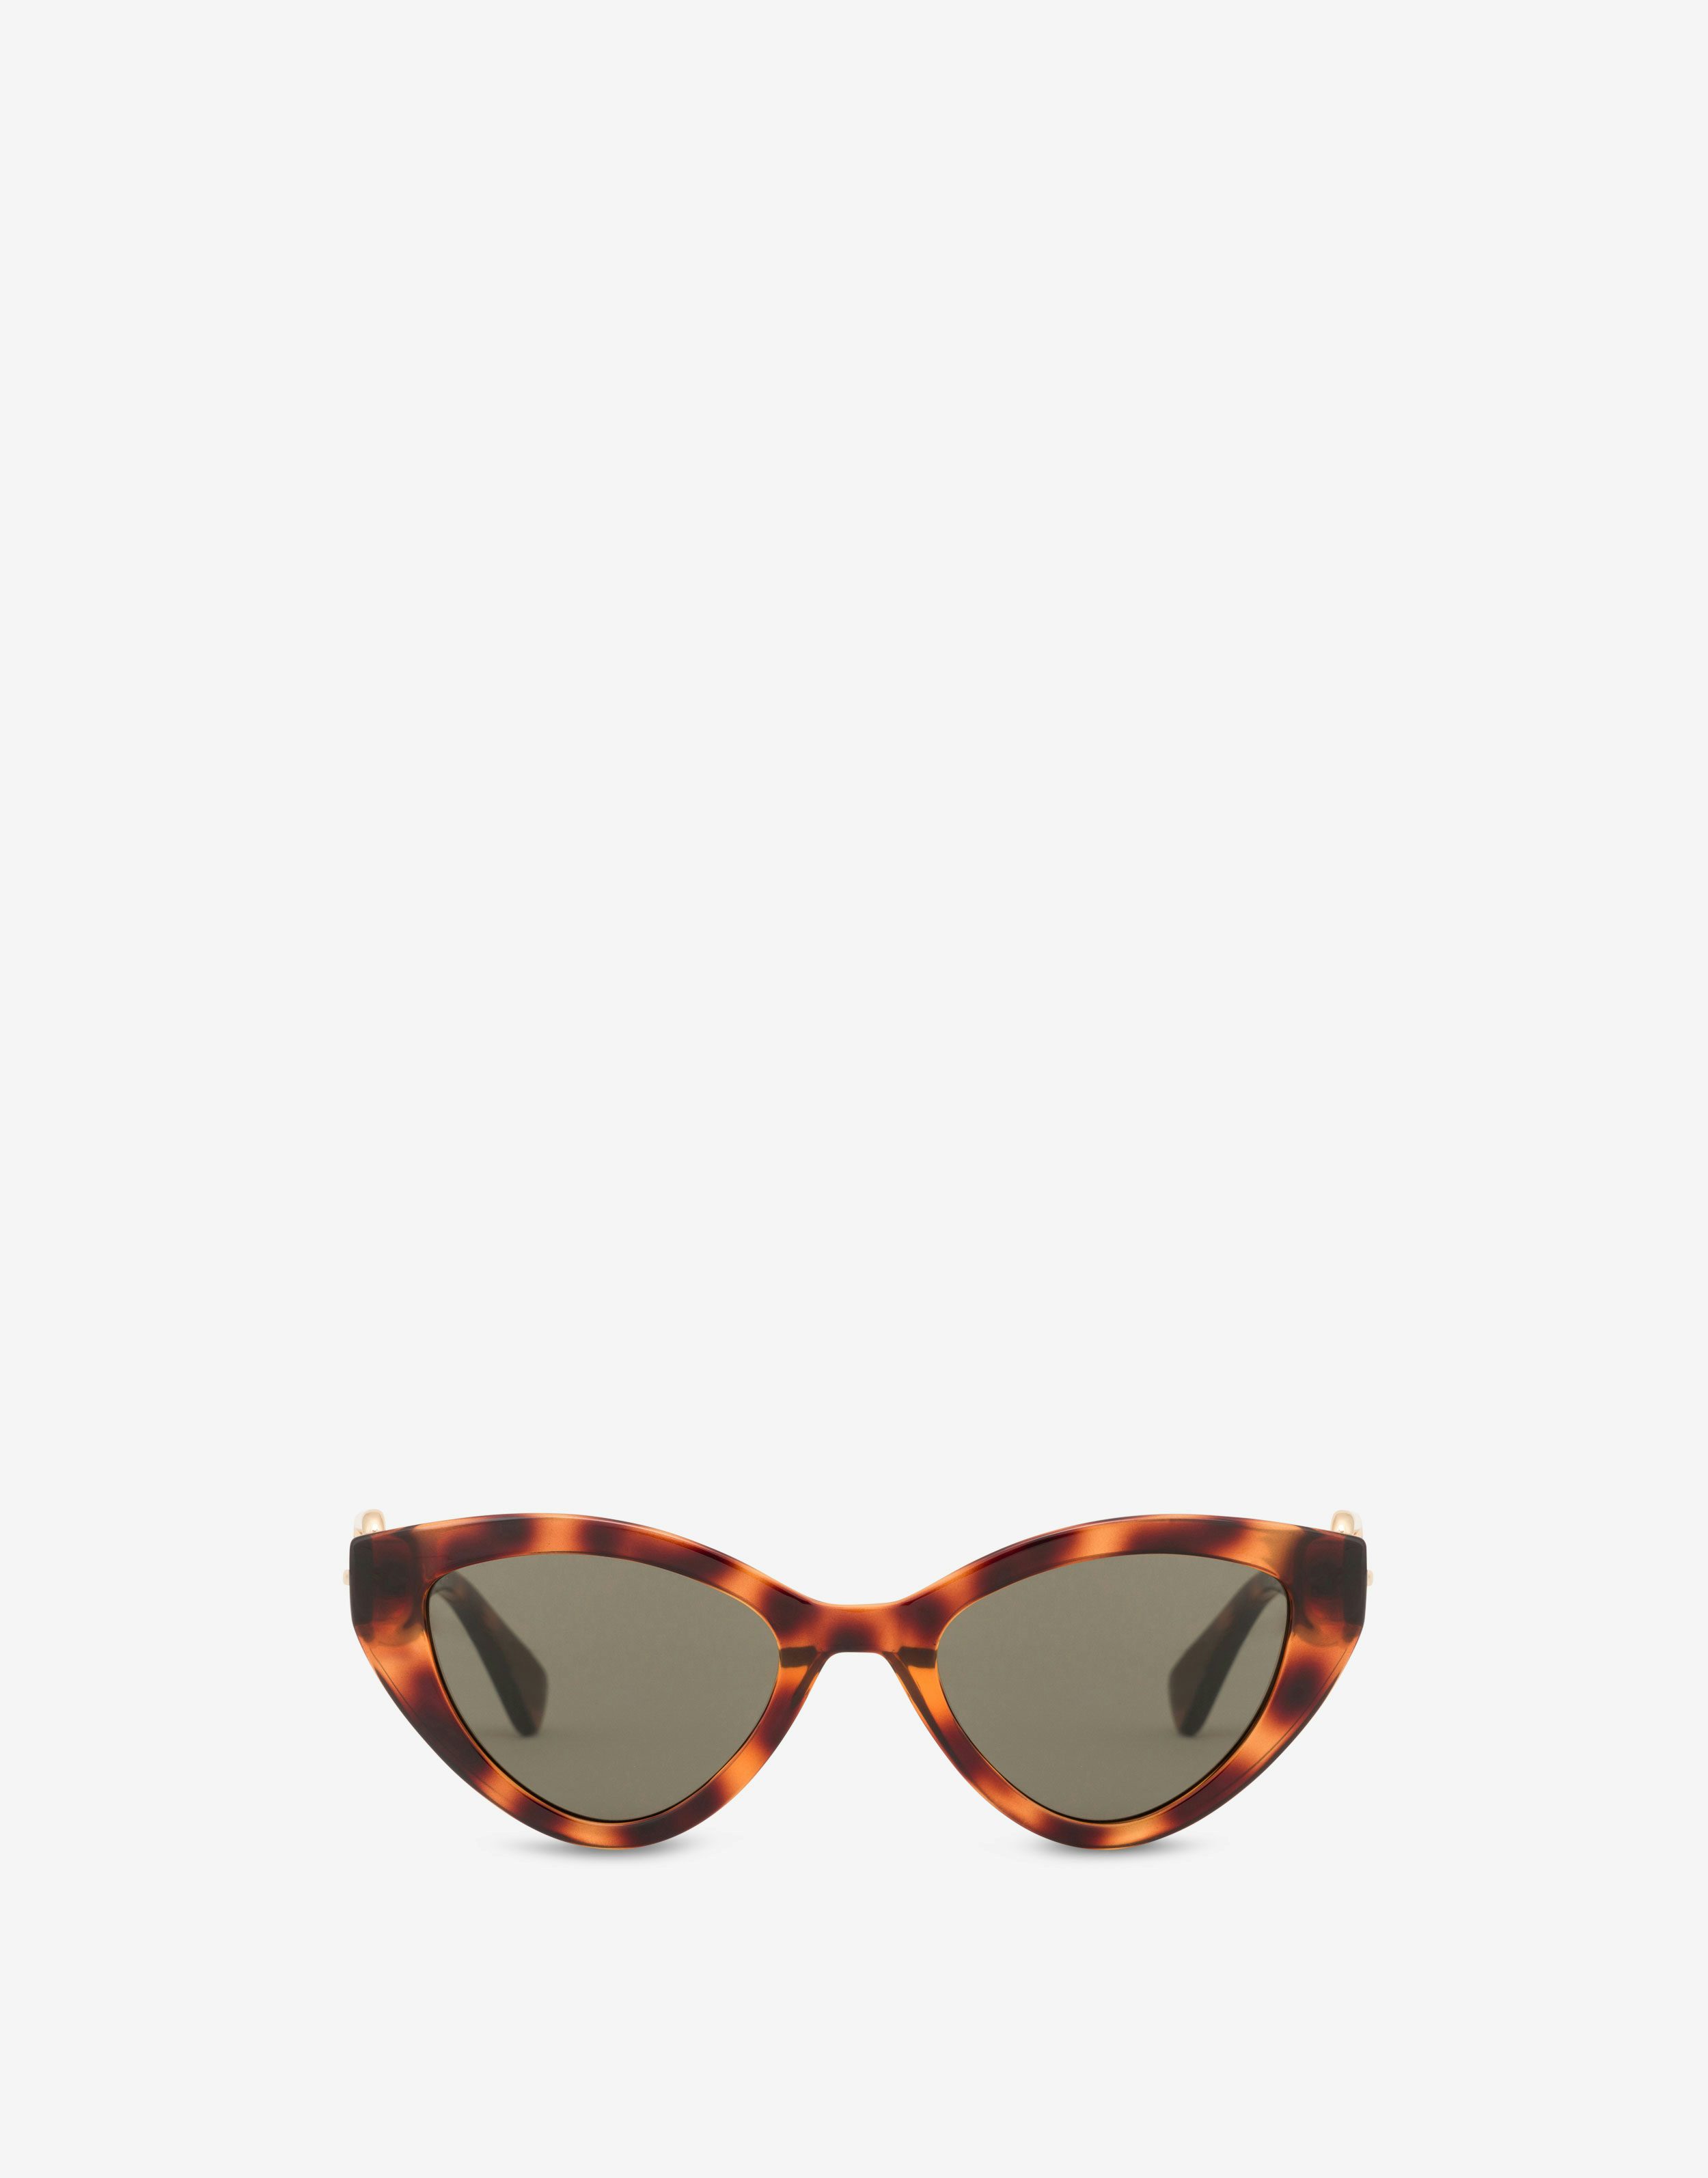 Buckle tortoiseshell sunglasses